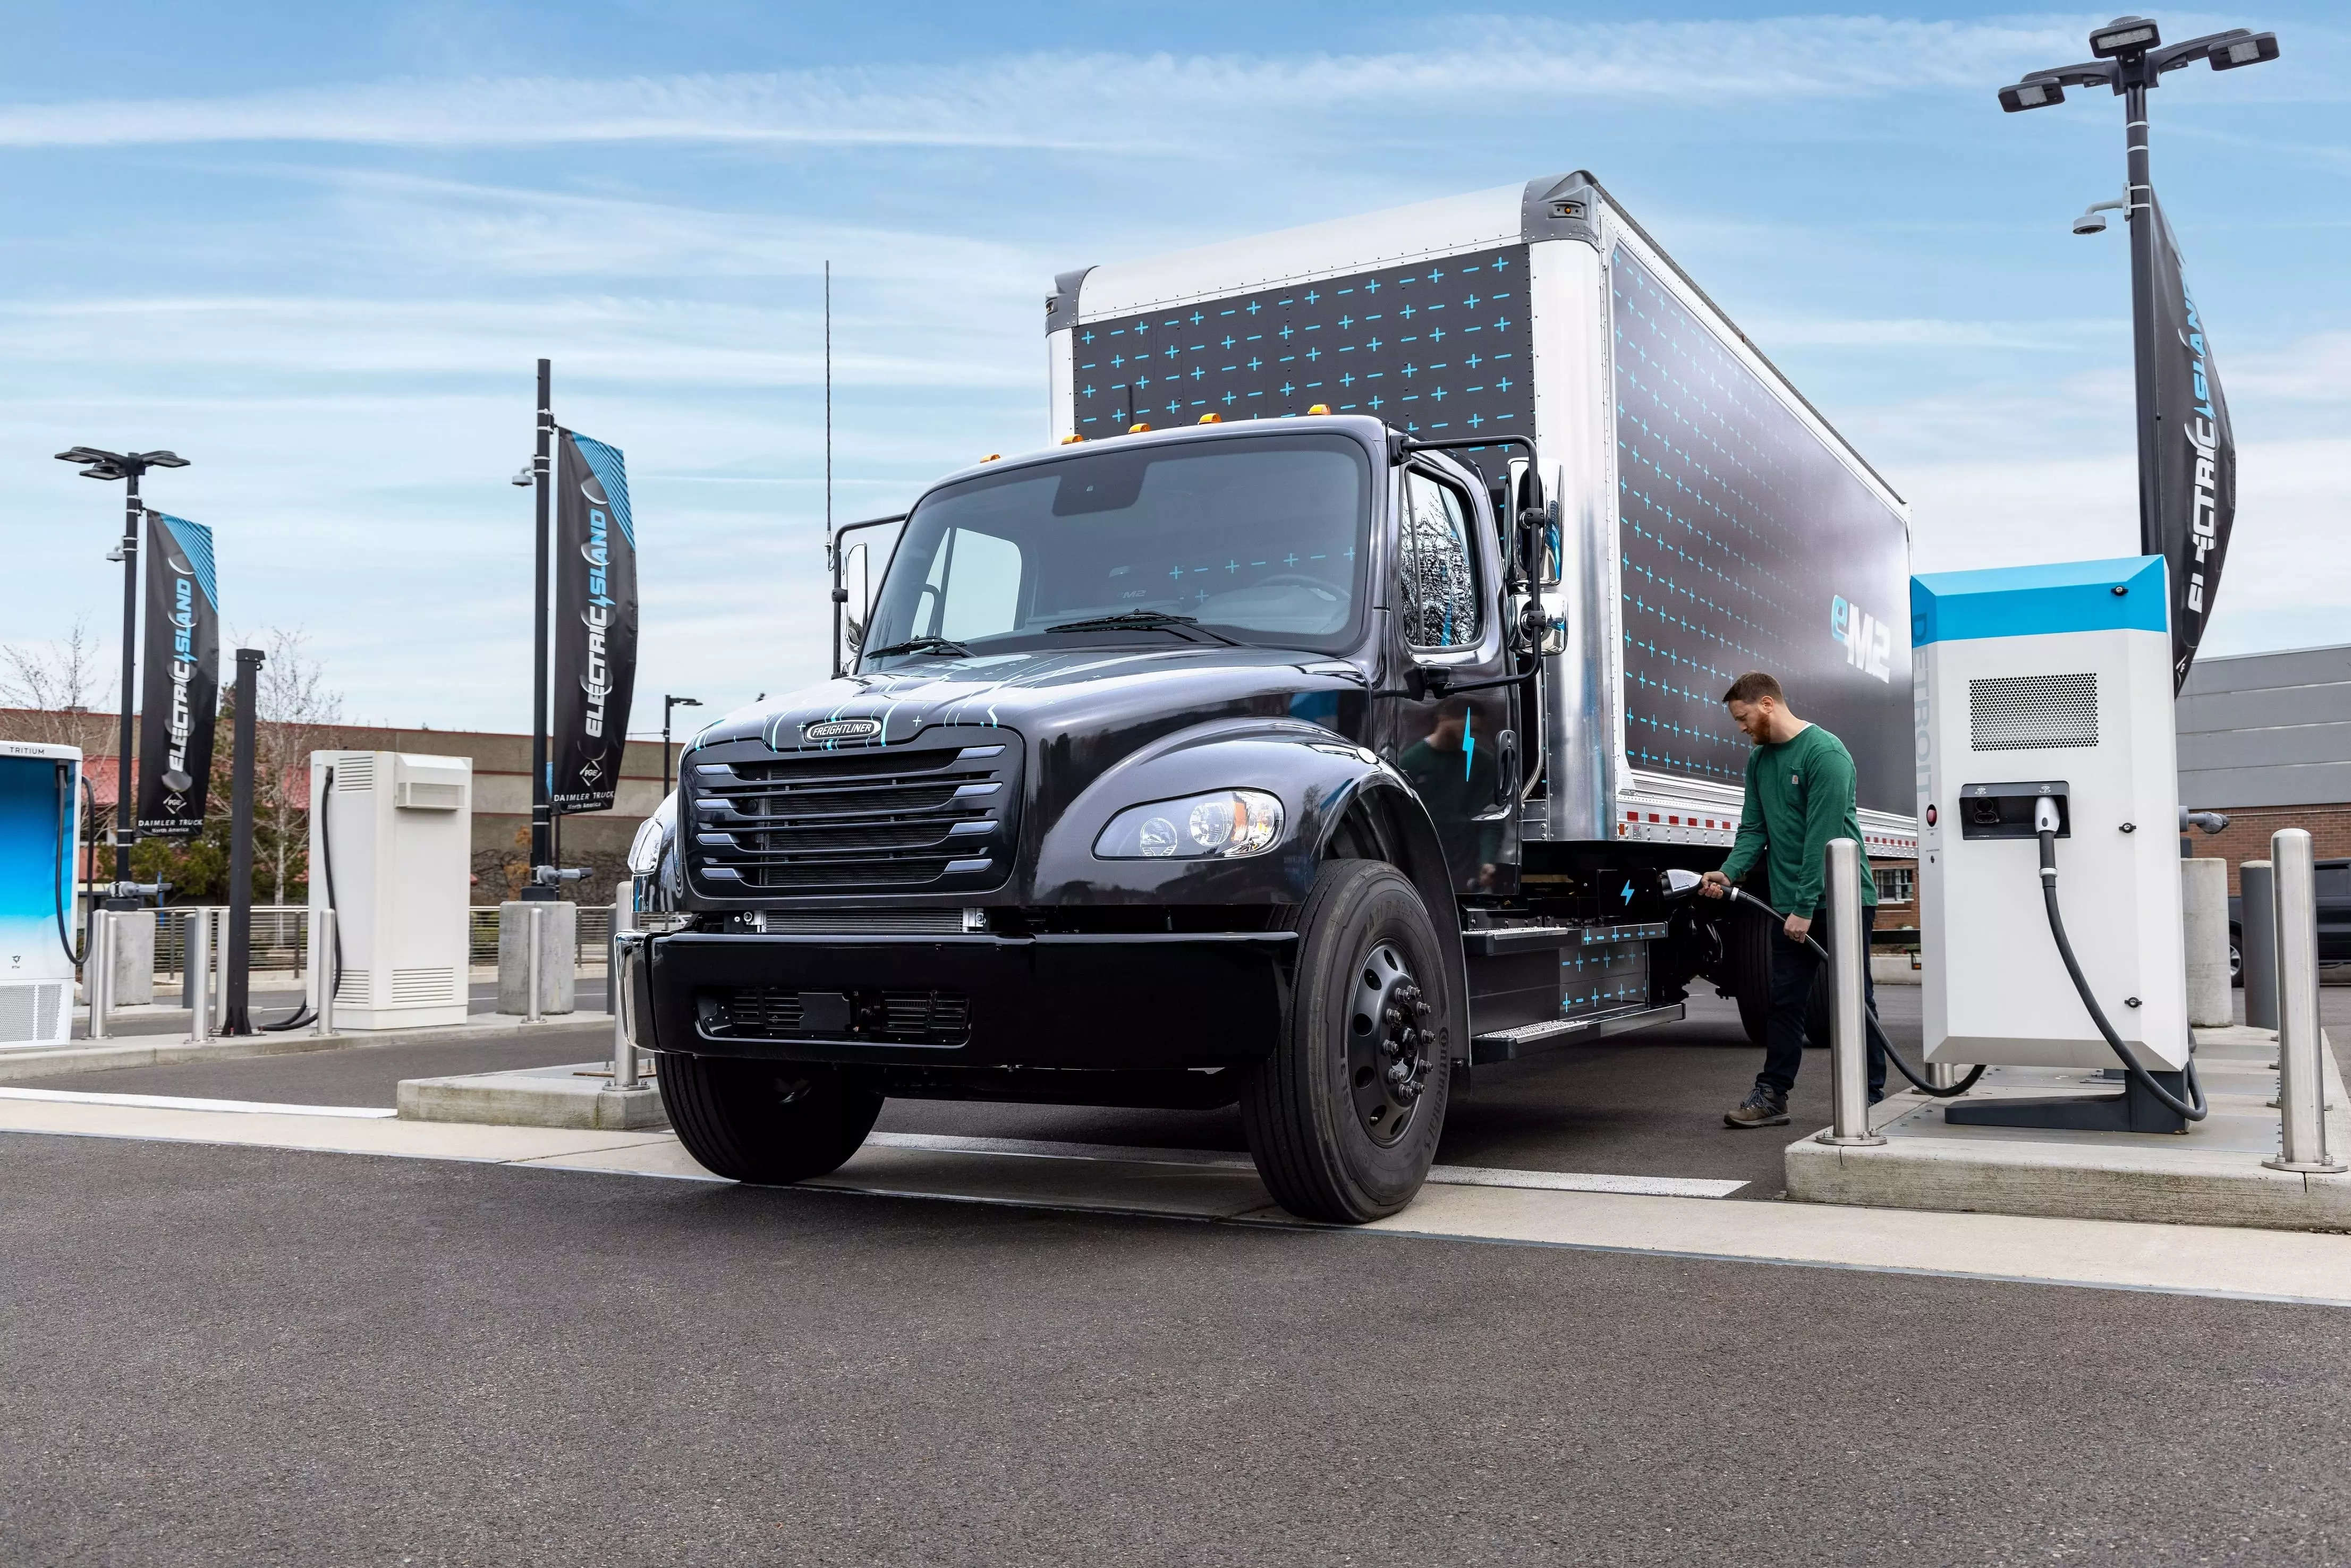 Penske takes delivery of electric Freightliner eCascadia semi trucks